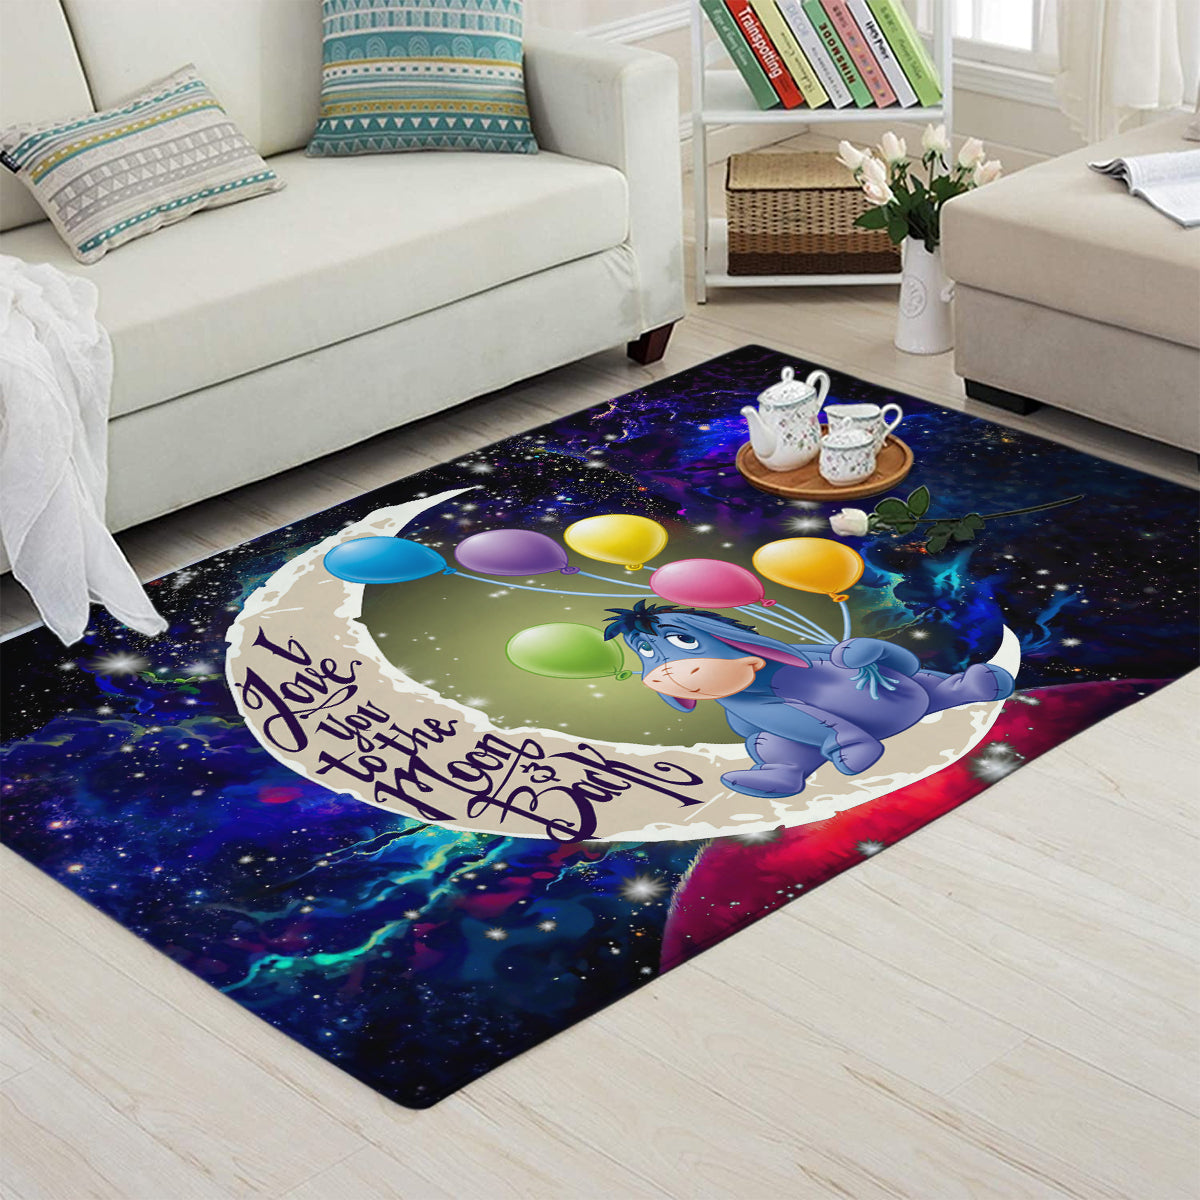 Eeyore Winnie The Pooh Love You To The Moon Galaxy Carpet Rug Home Room Decor